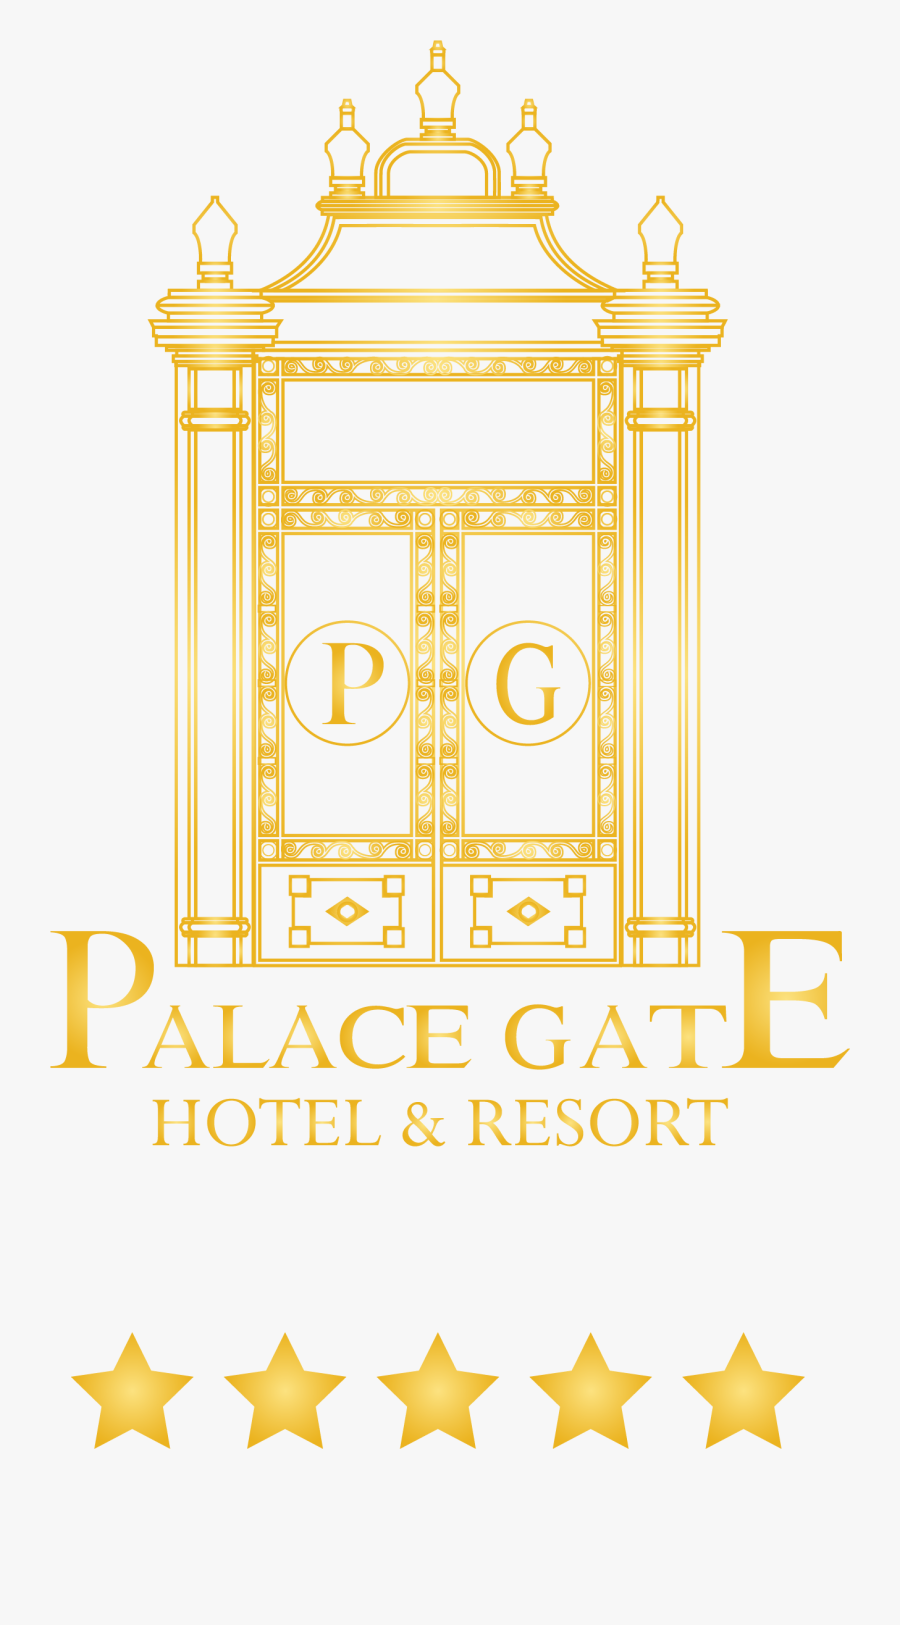 Palace Gate Hotel & Resort - Palace Gate Hotel & Resort Logo, Transparent Clipart